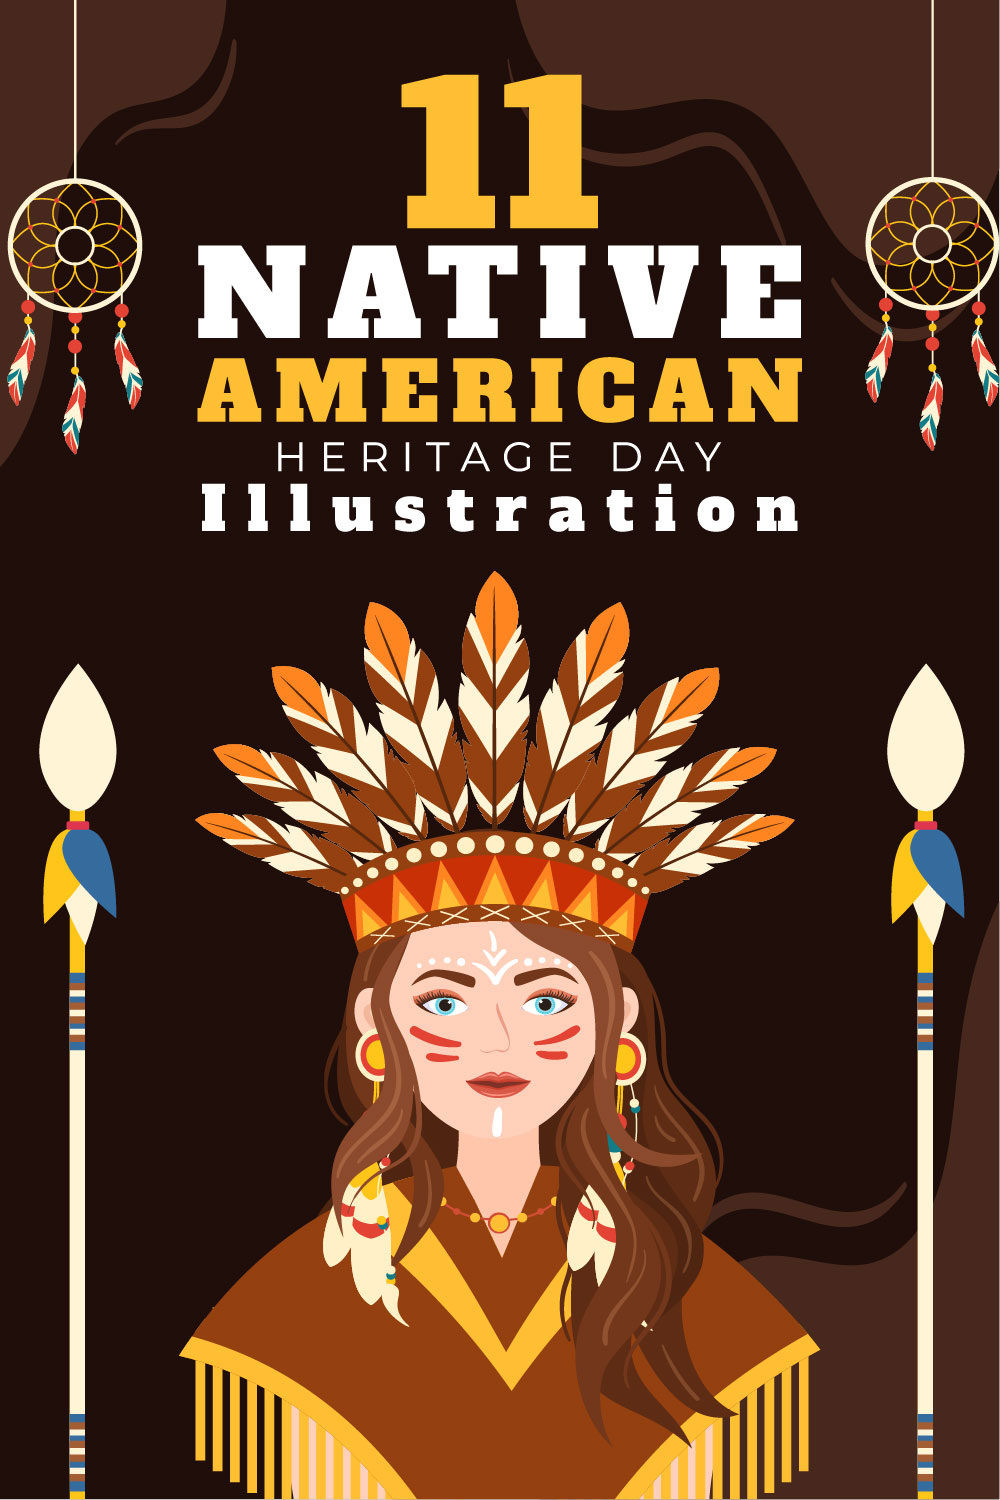 11 Native American Heritage Day Illustration Pinterest Image.